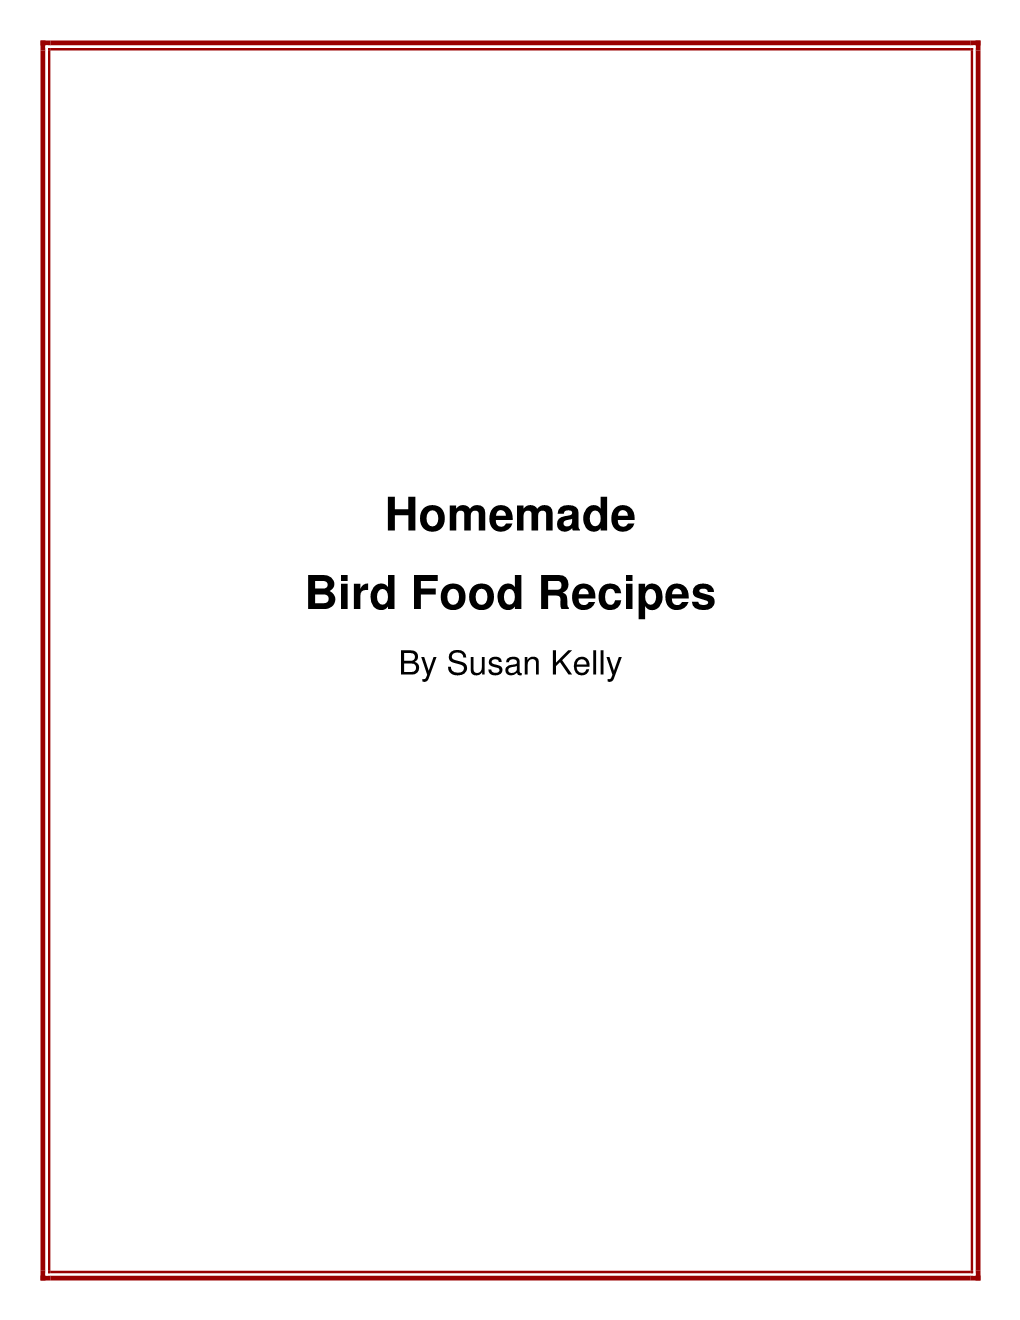 Homemade Bird Food Recipes by Susan Kelly